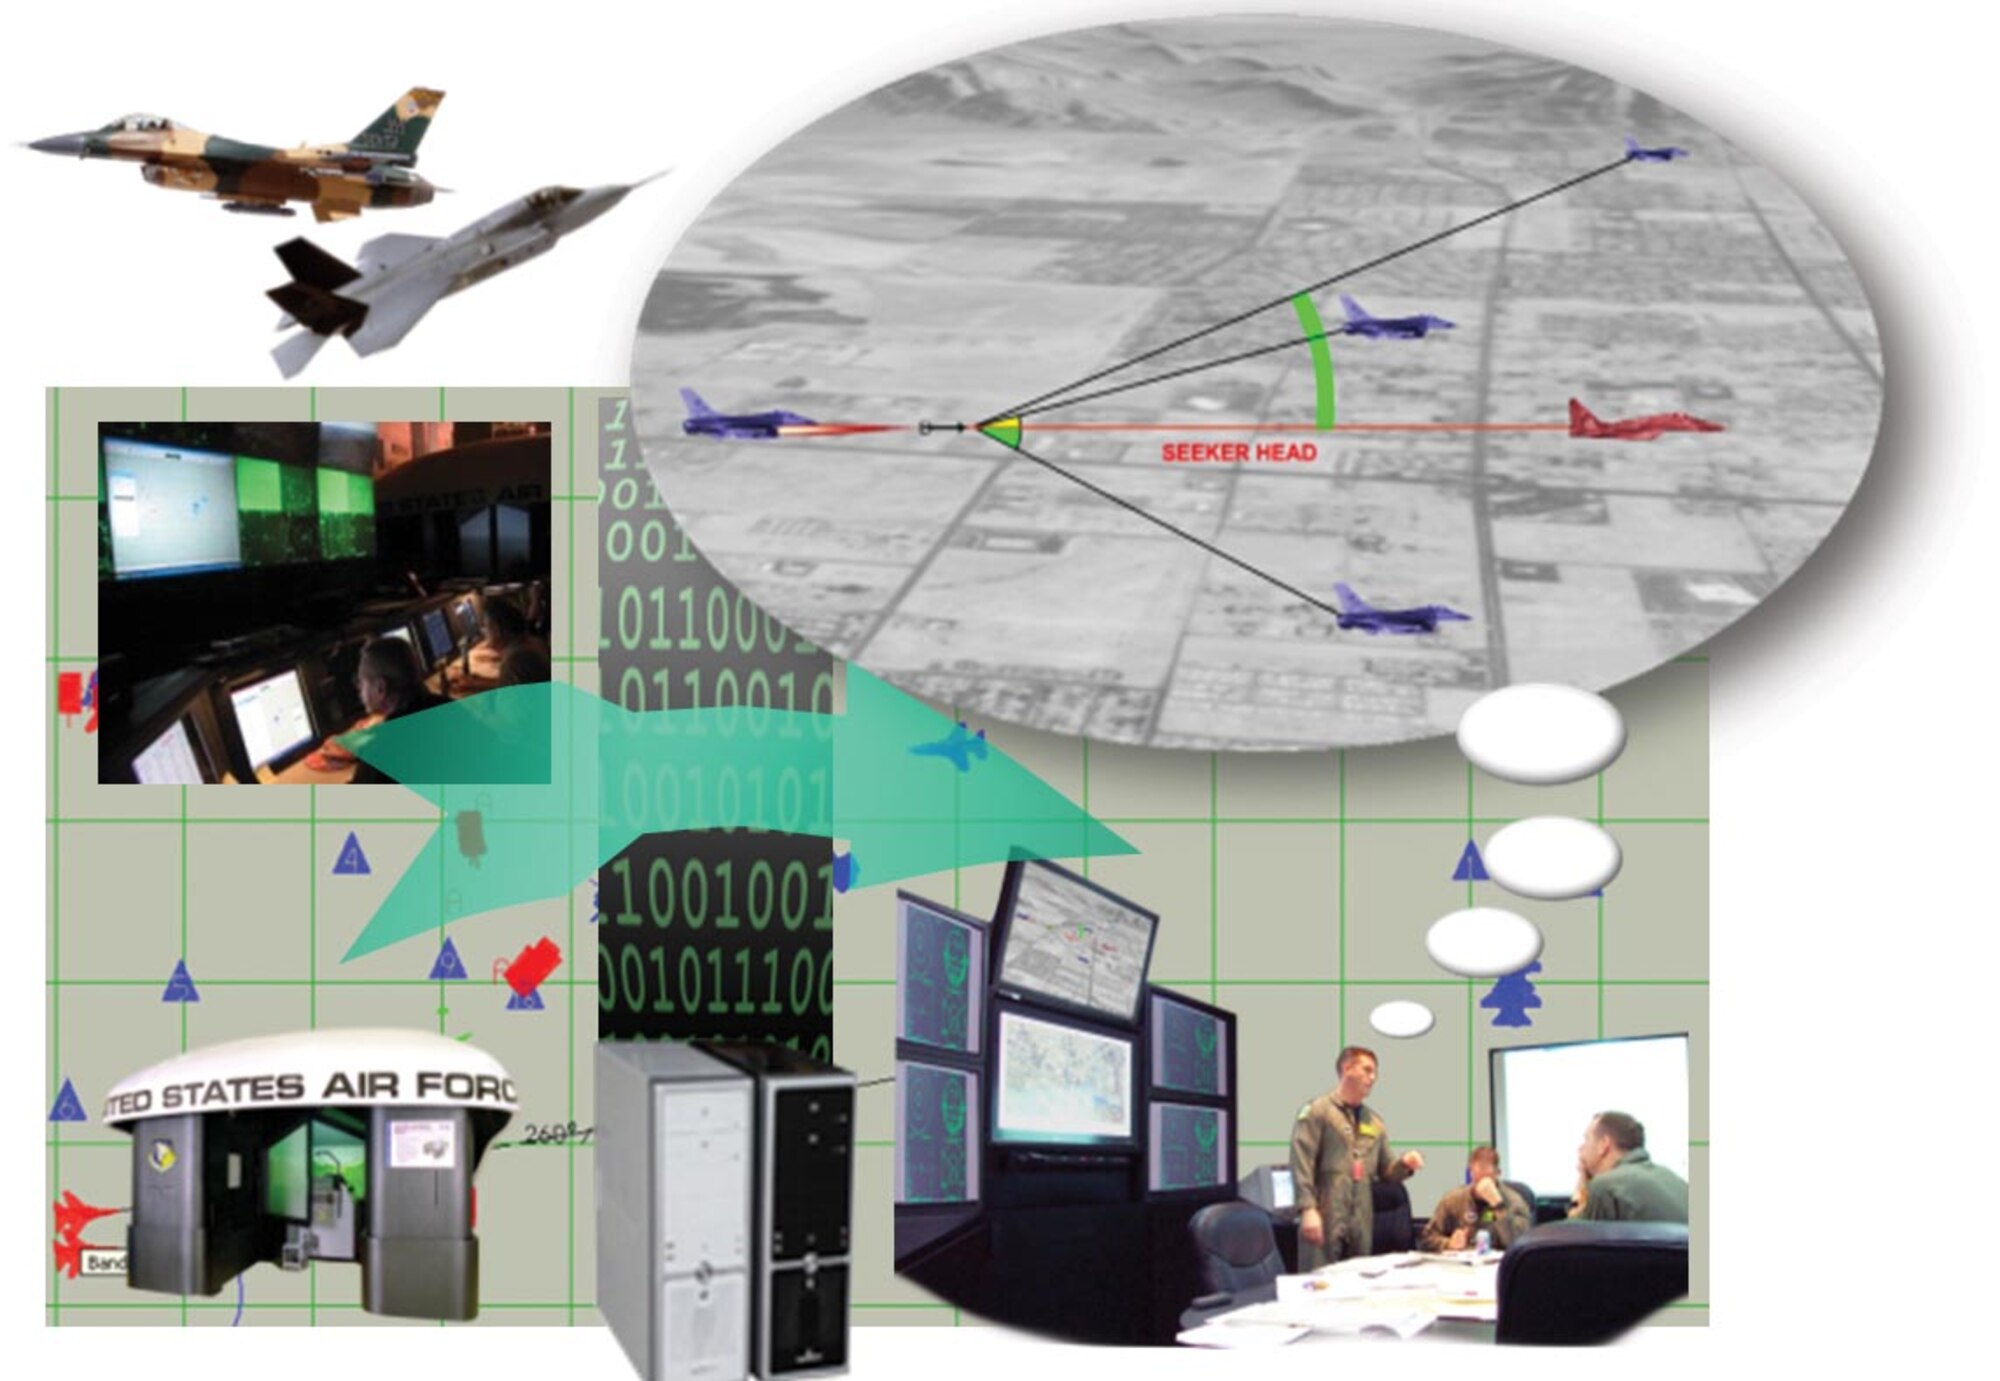 Performance Evaluation Tracking System live-virtual-constructive technology integration.  USAF Image. 
